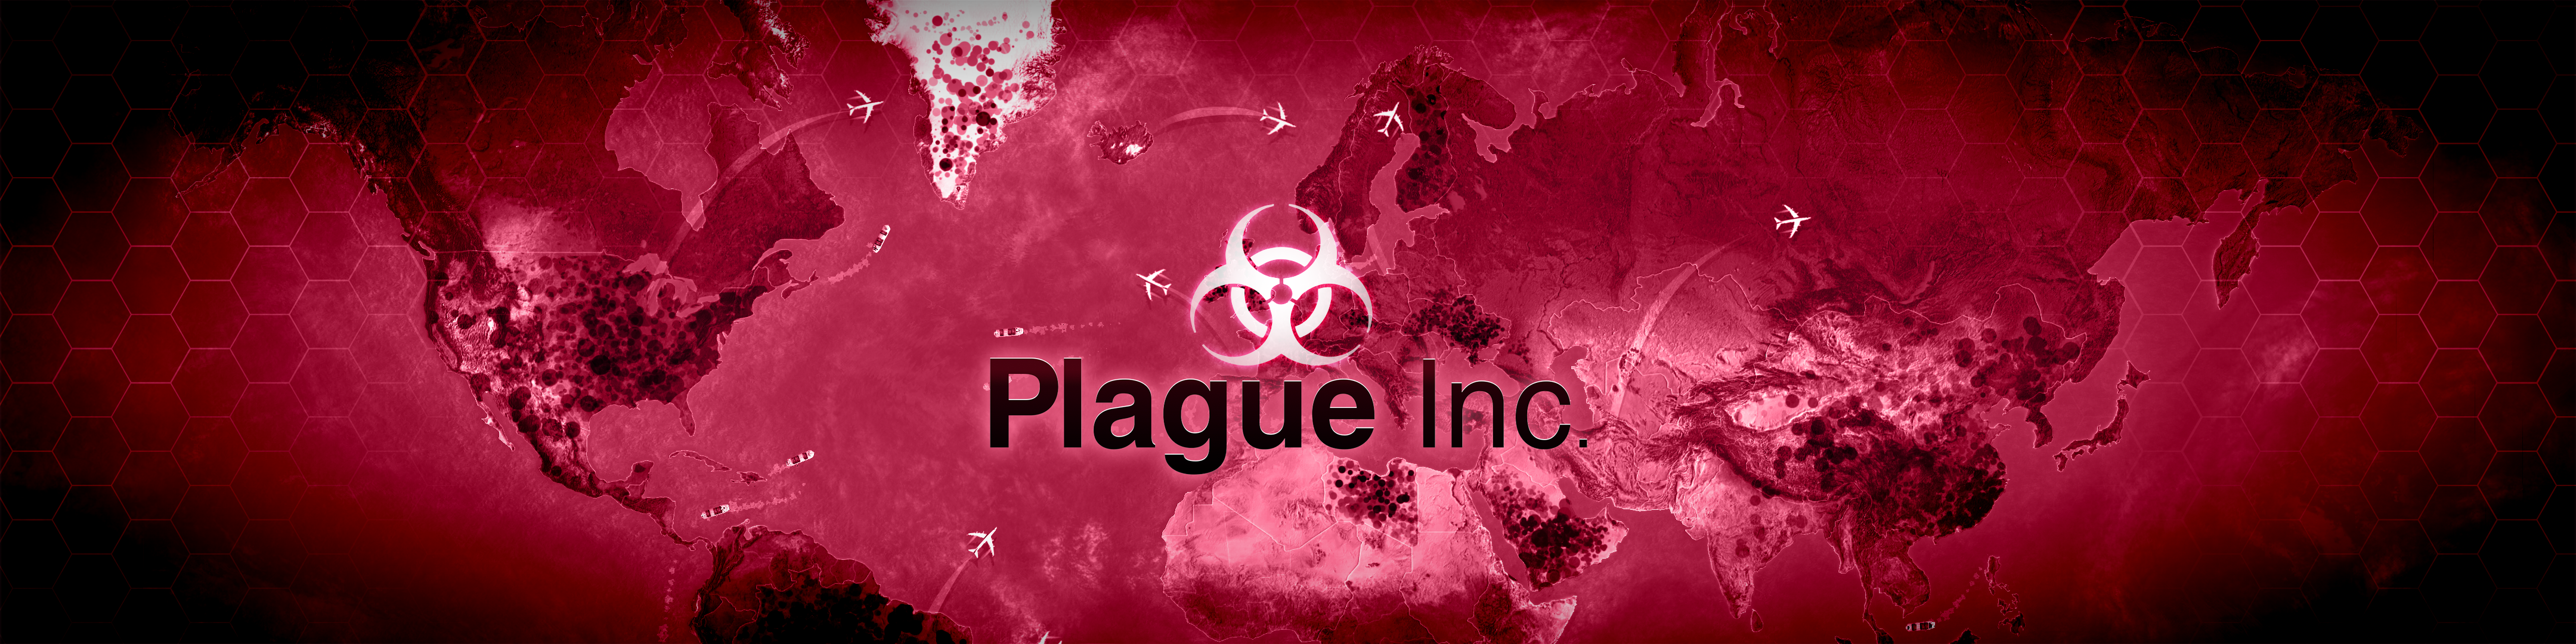 Plague Inc Overview Apple App Store Us - reviews game review the roblox plague